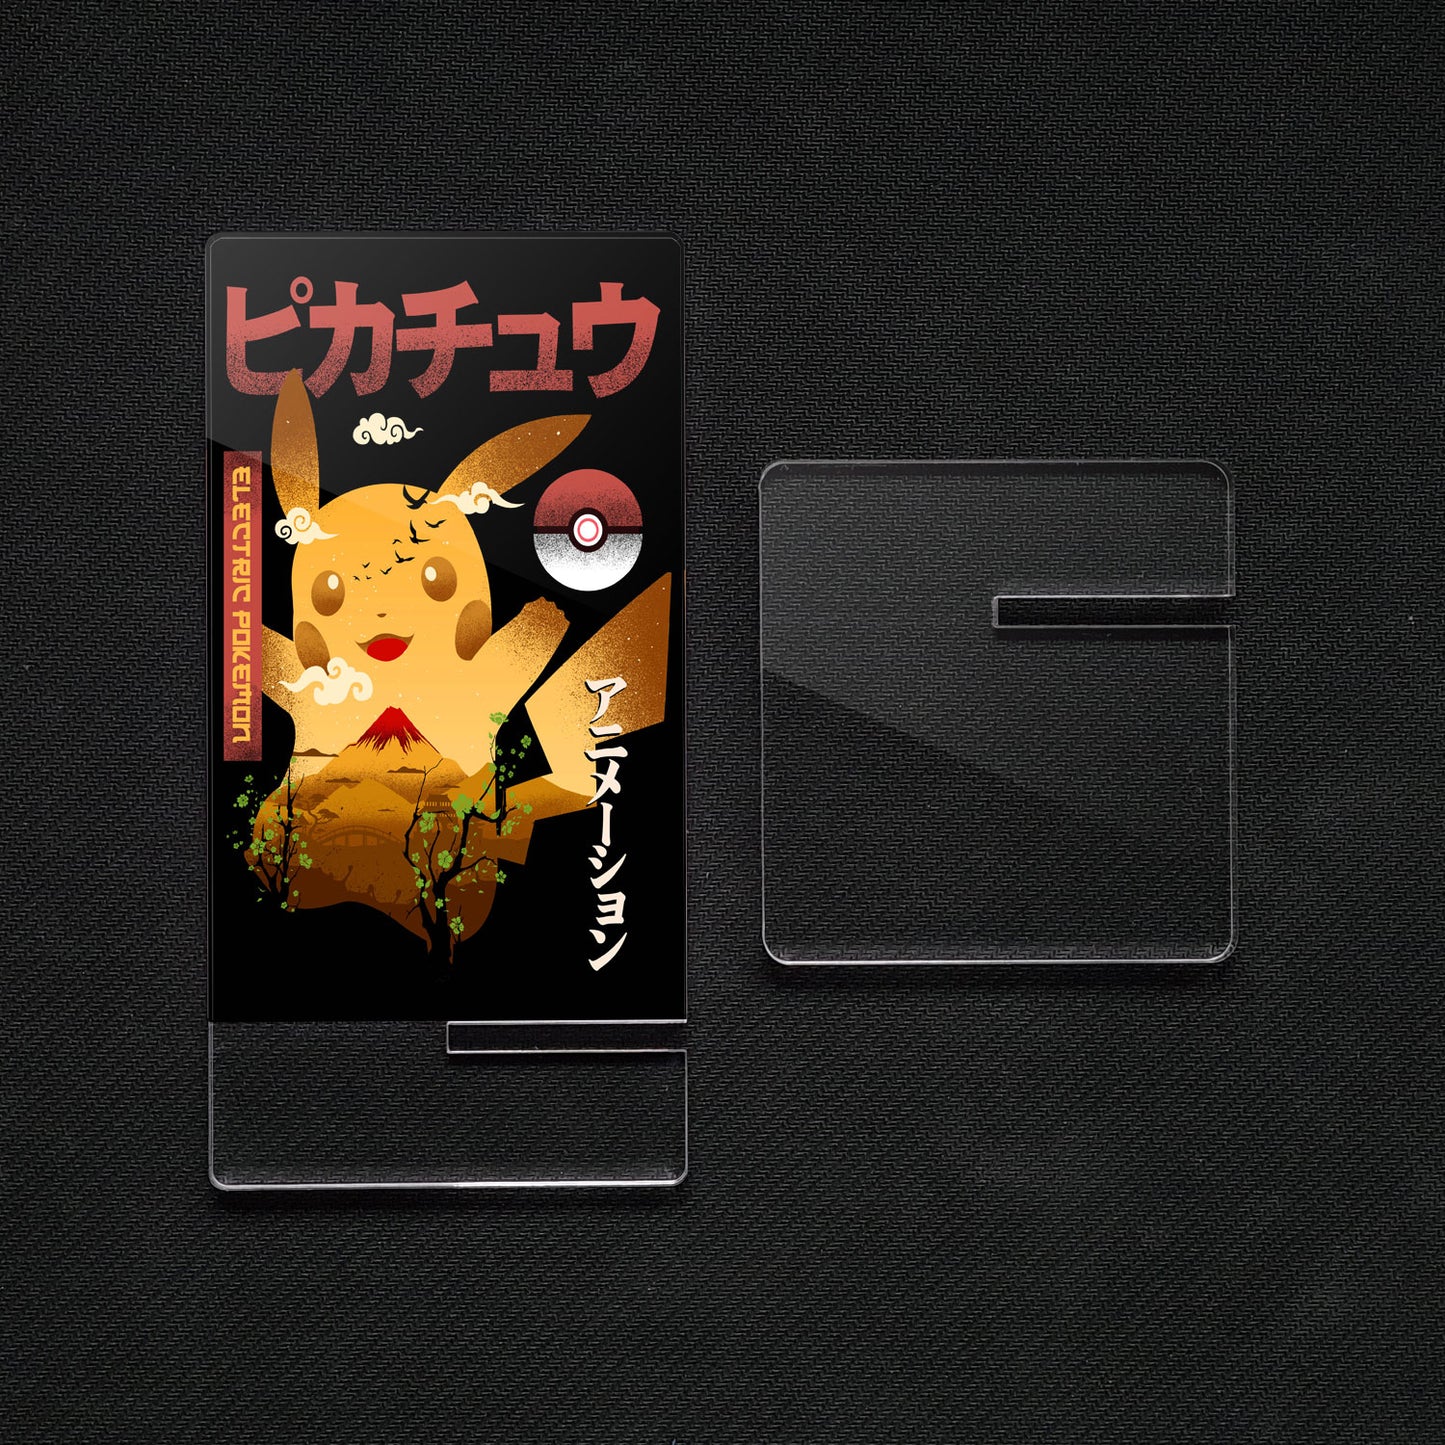 Pokémon Pikachu Mobile Holder, methacrylate